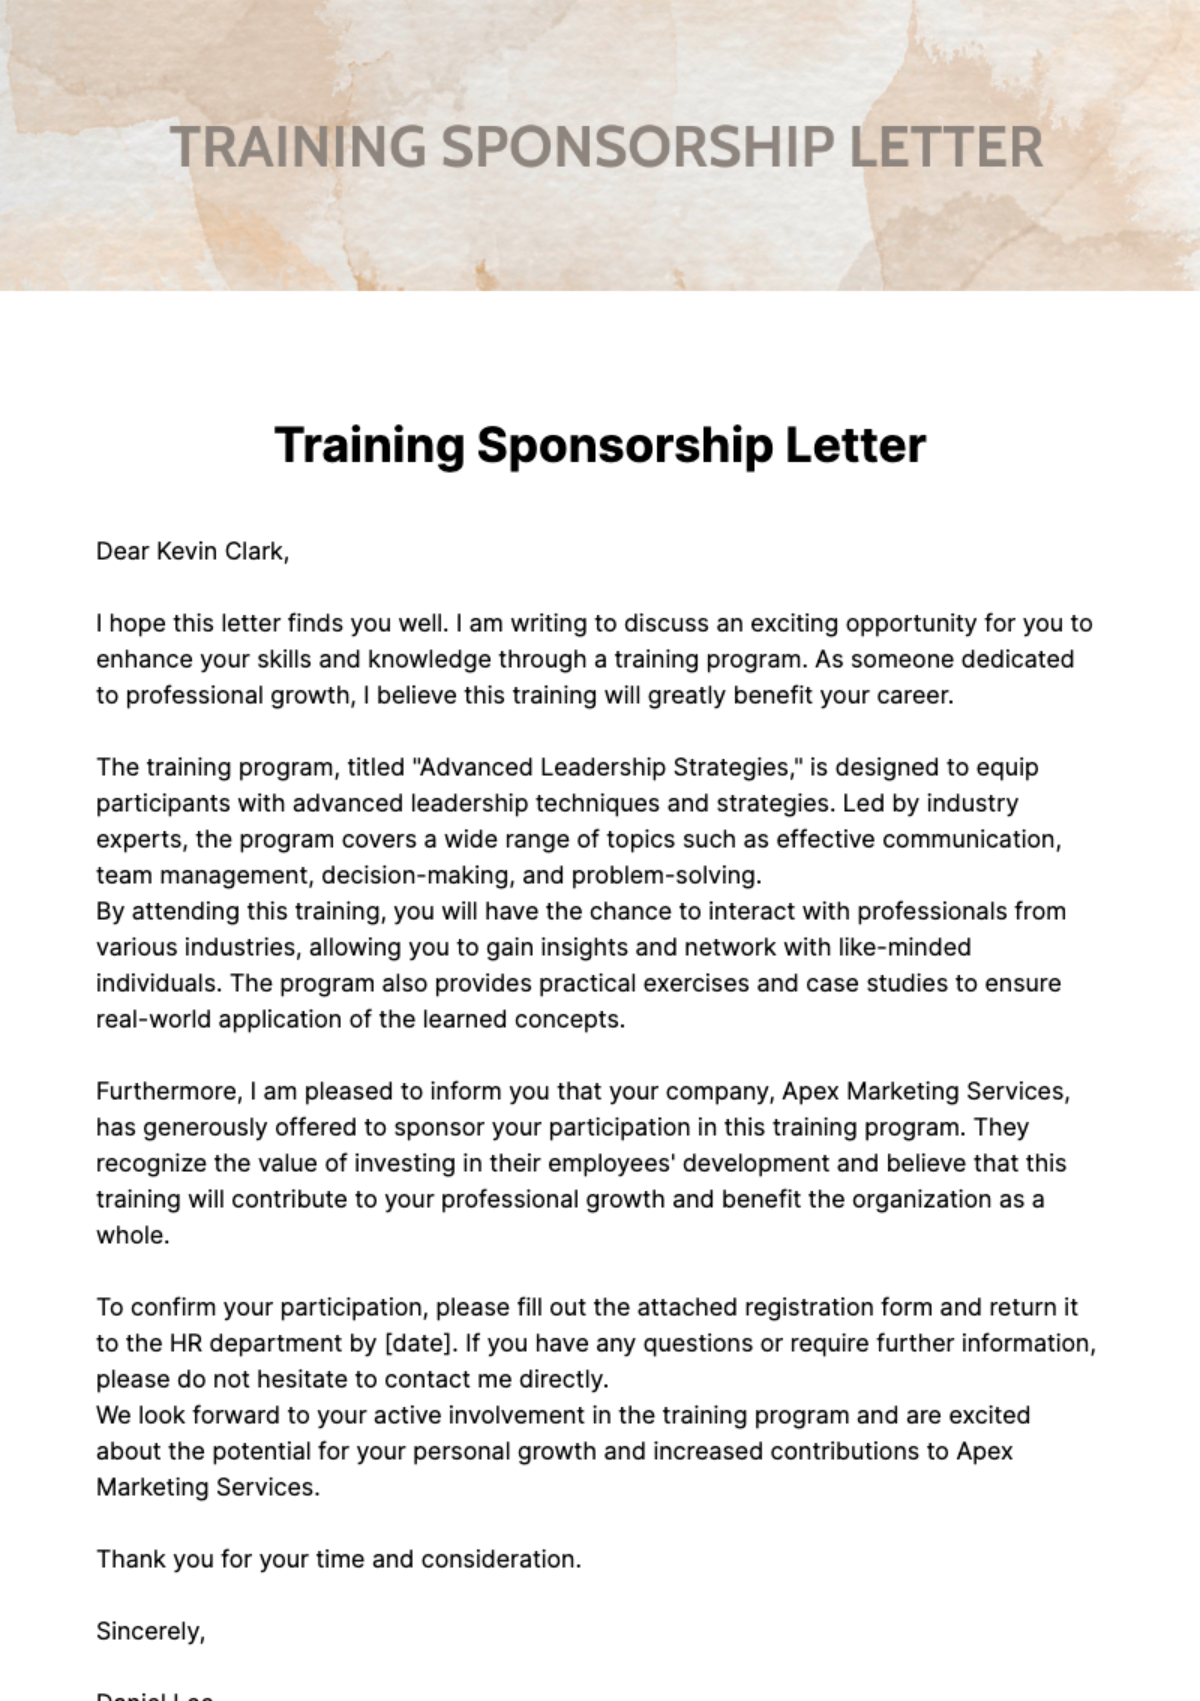 Free Training Sponsorship Letter Template